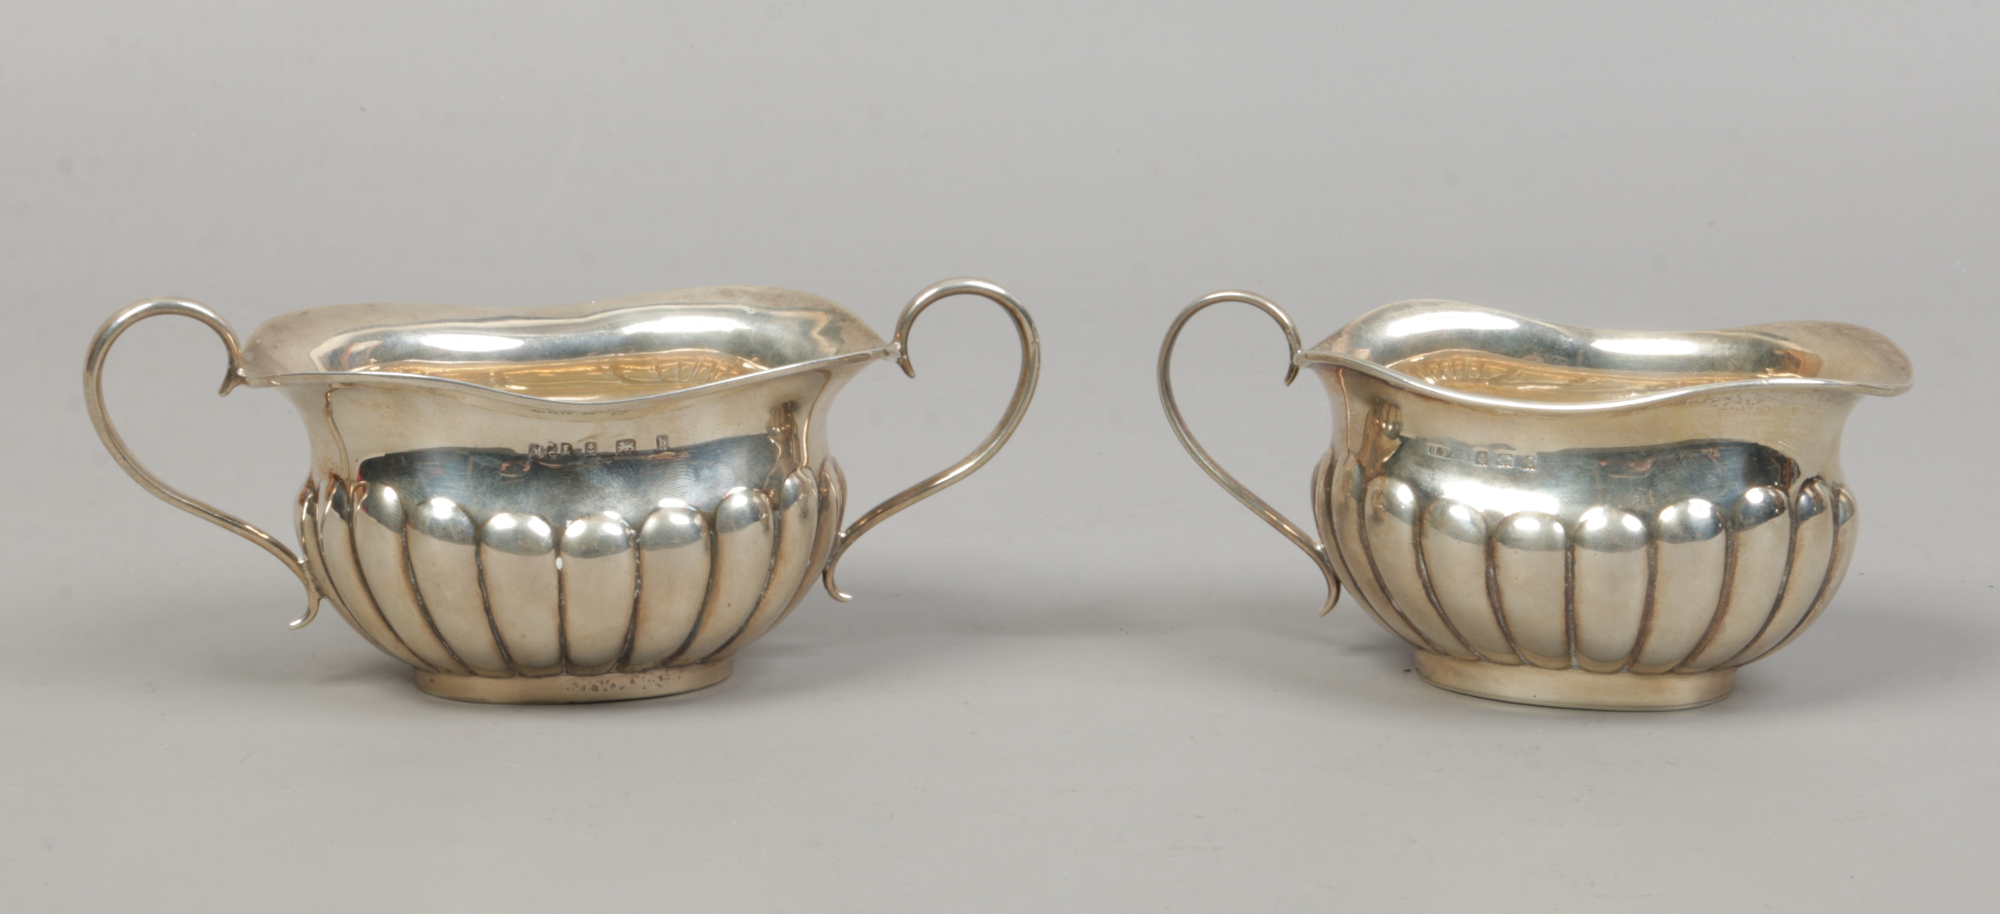 A matched silver cream jug and sugar bowl, assayed Birmingham 1901 and 1938, 217 grams.